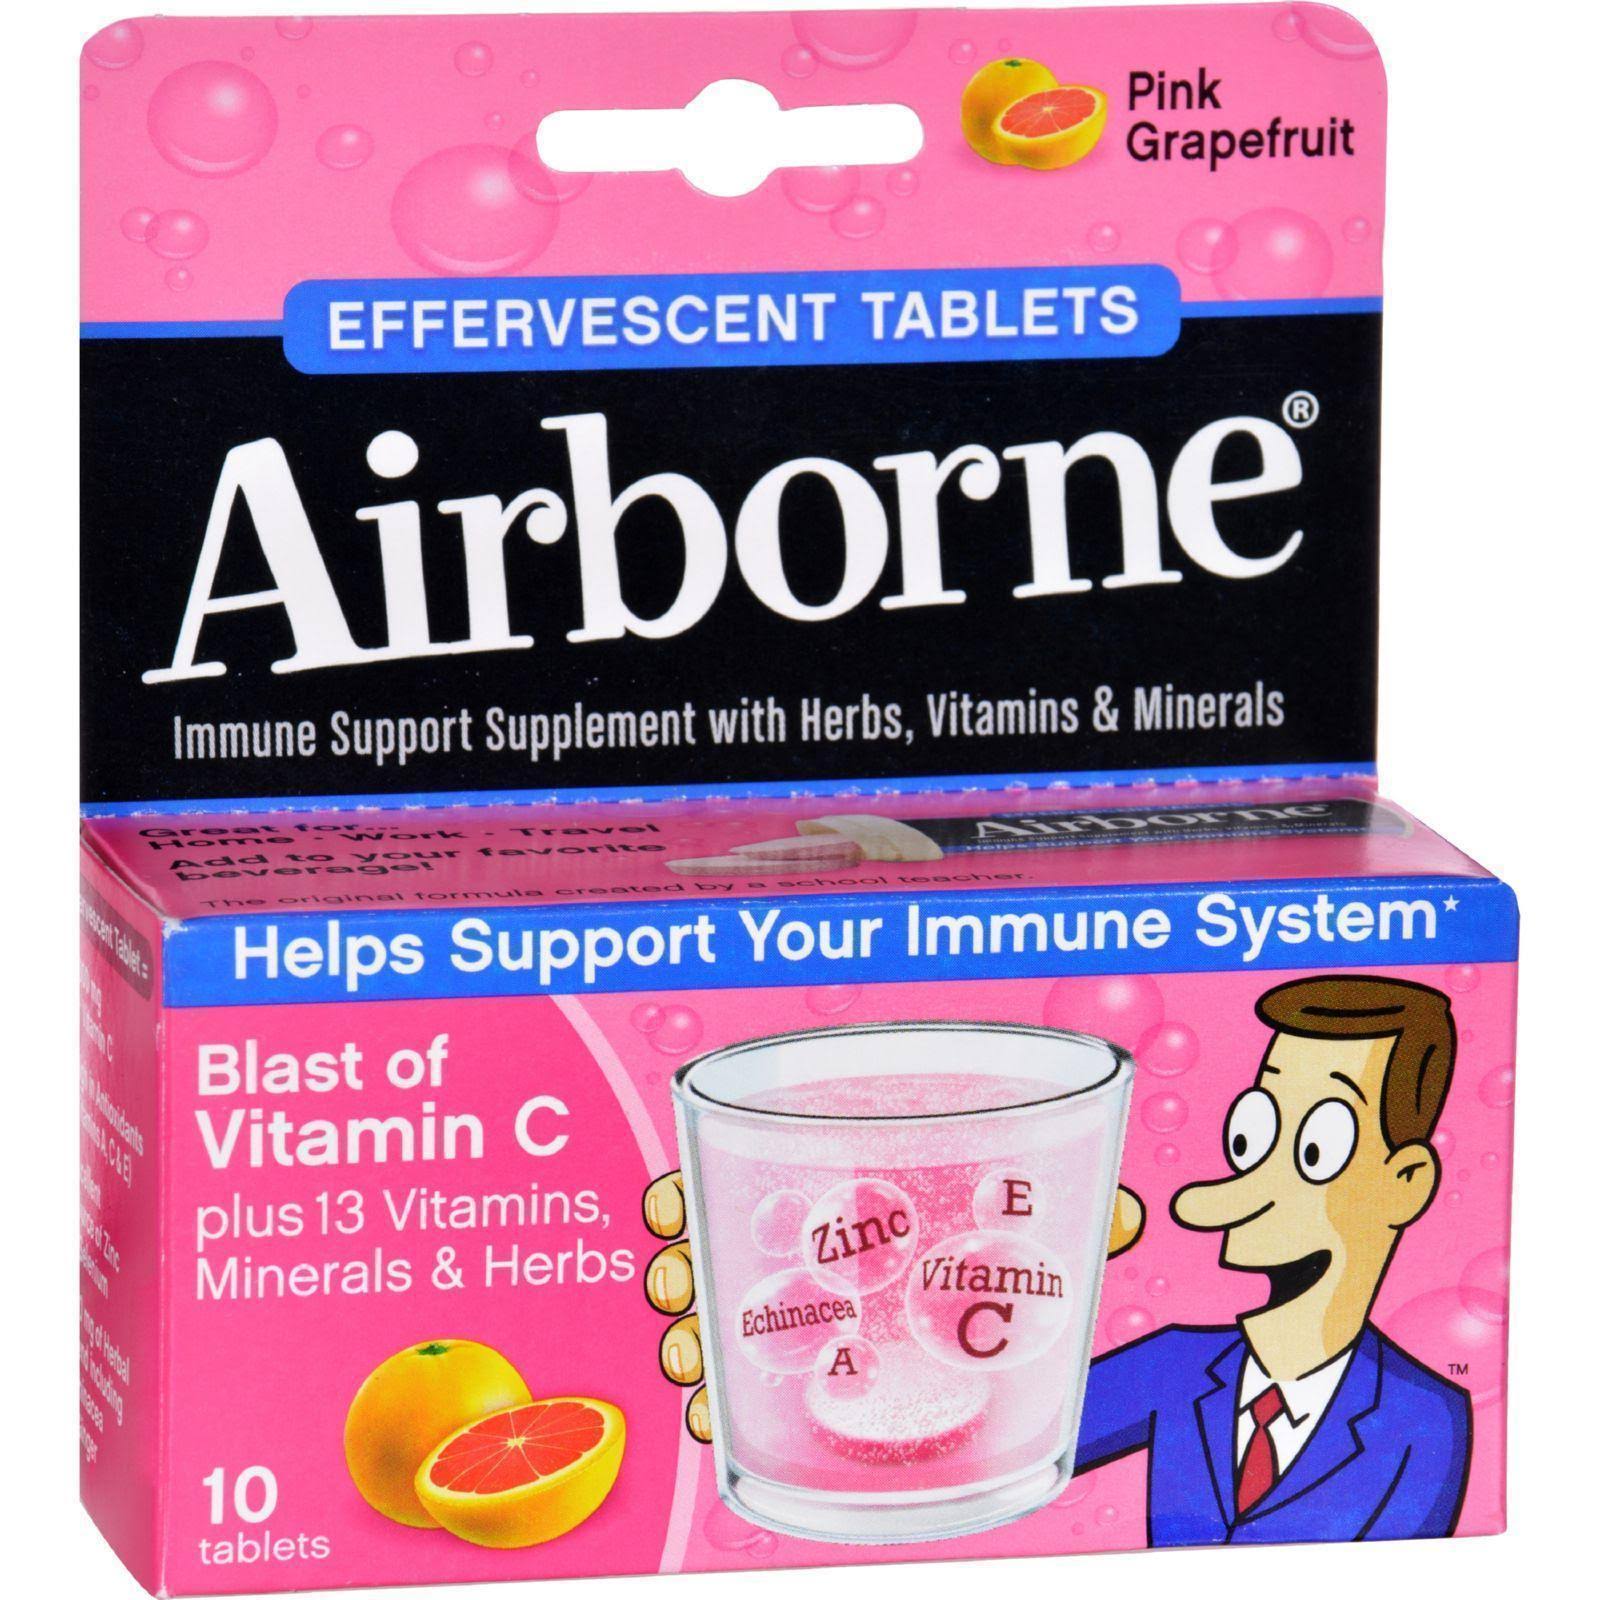 Airborne Original Effervescent Immune Support Tablets - Pink Grapefruit, 10pk